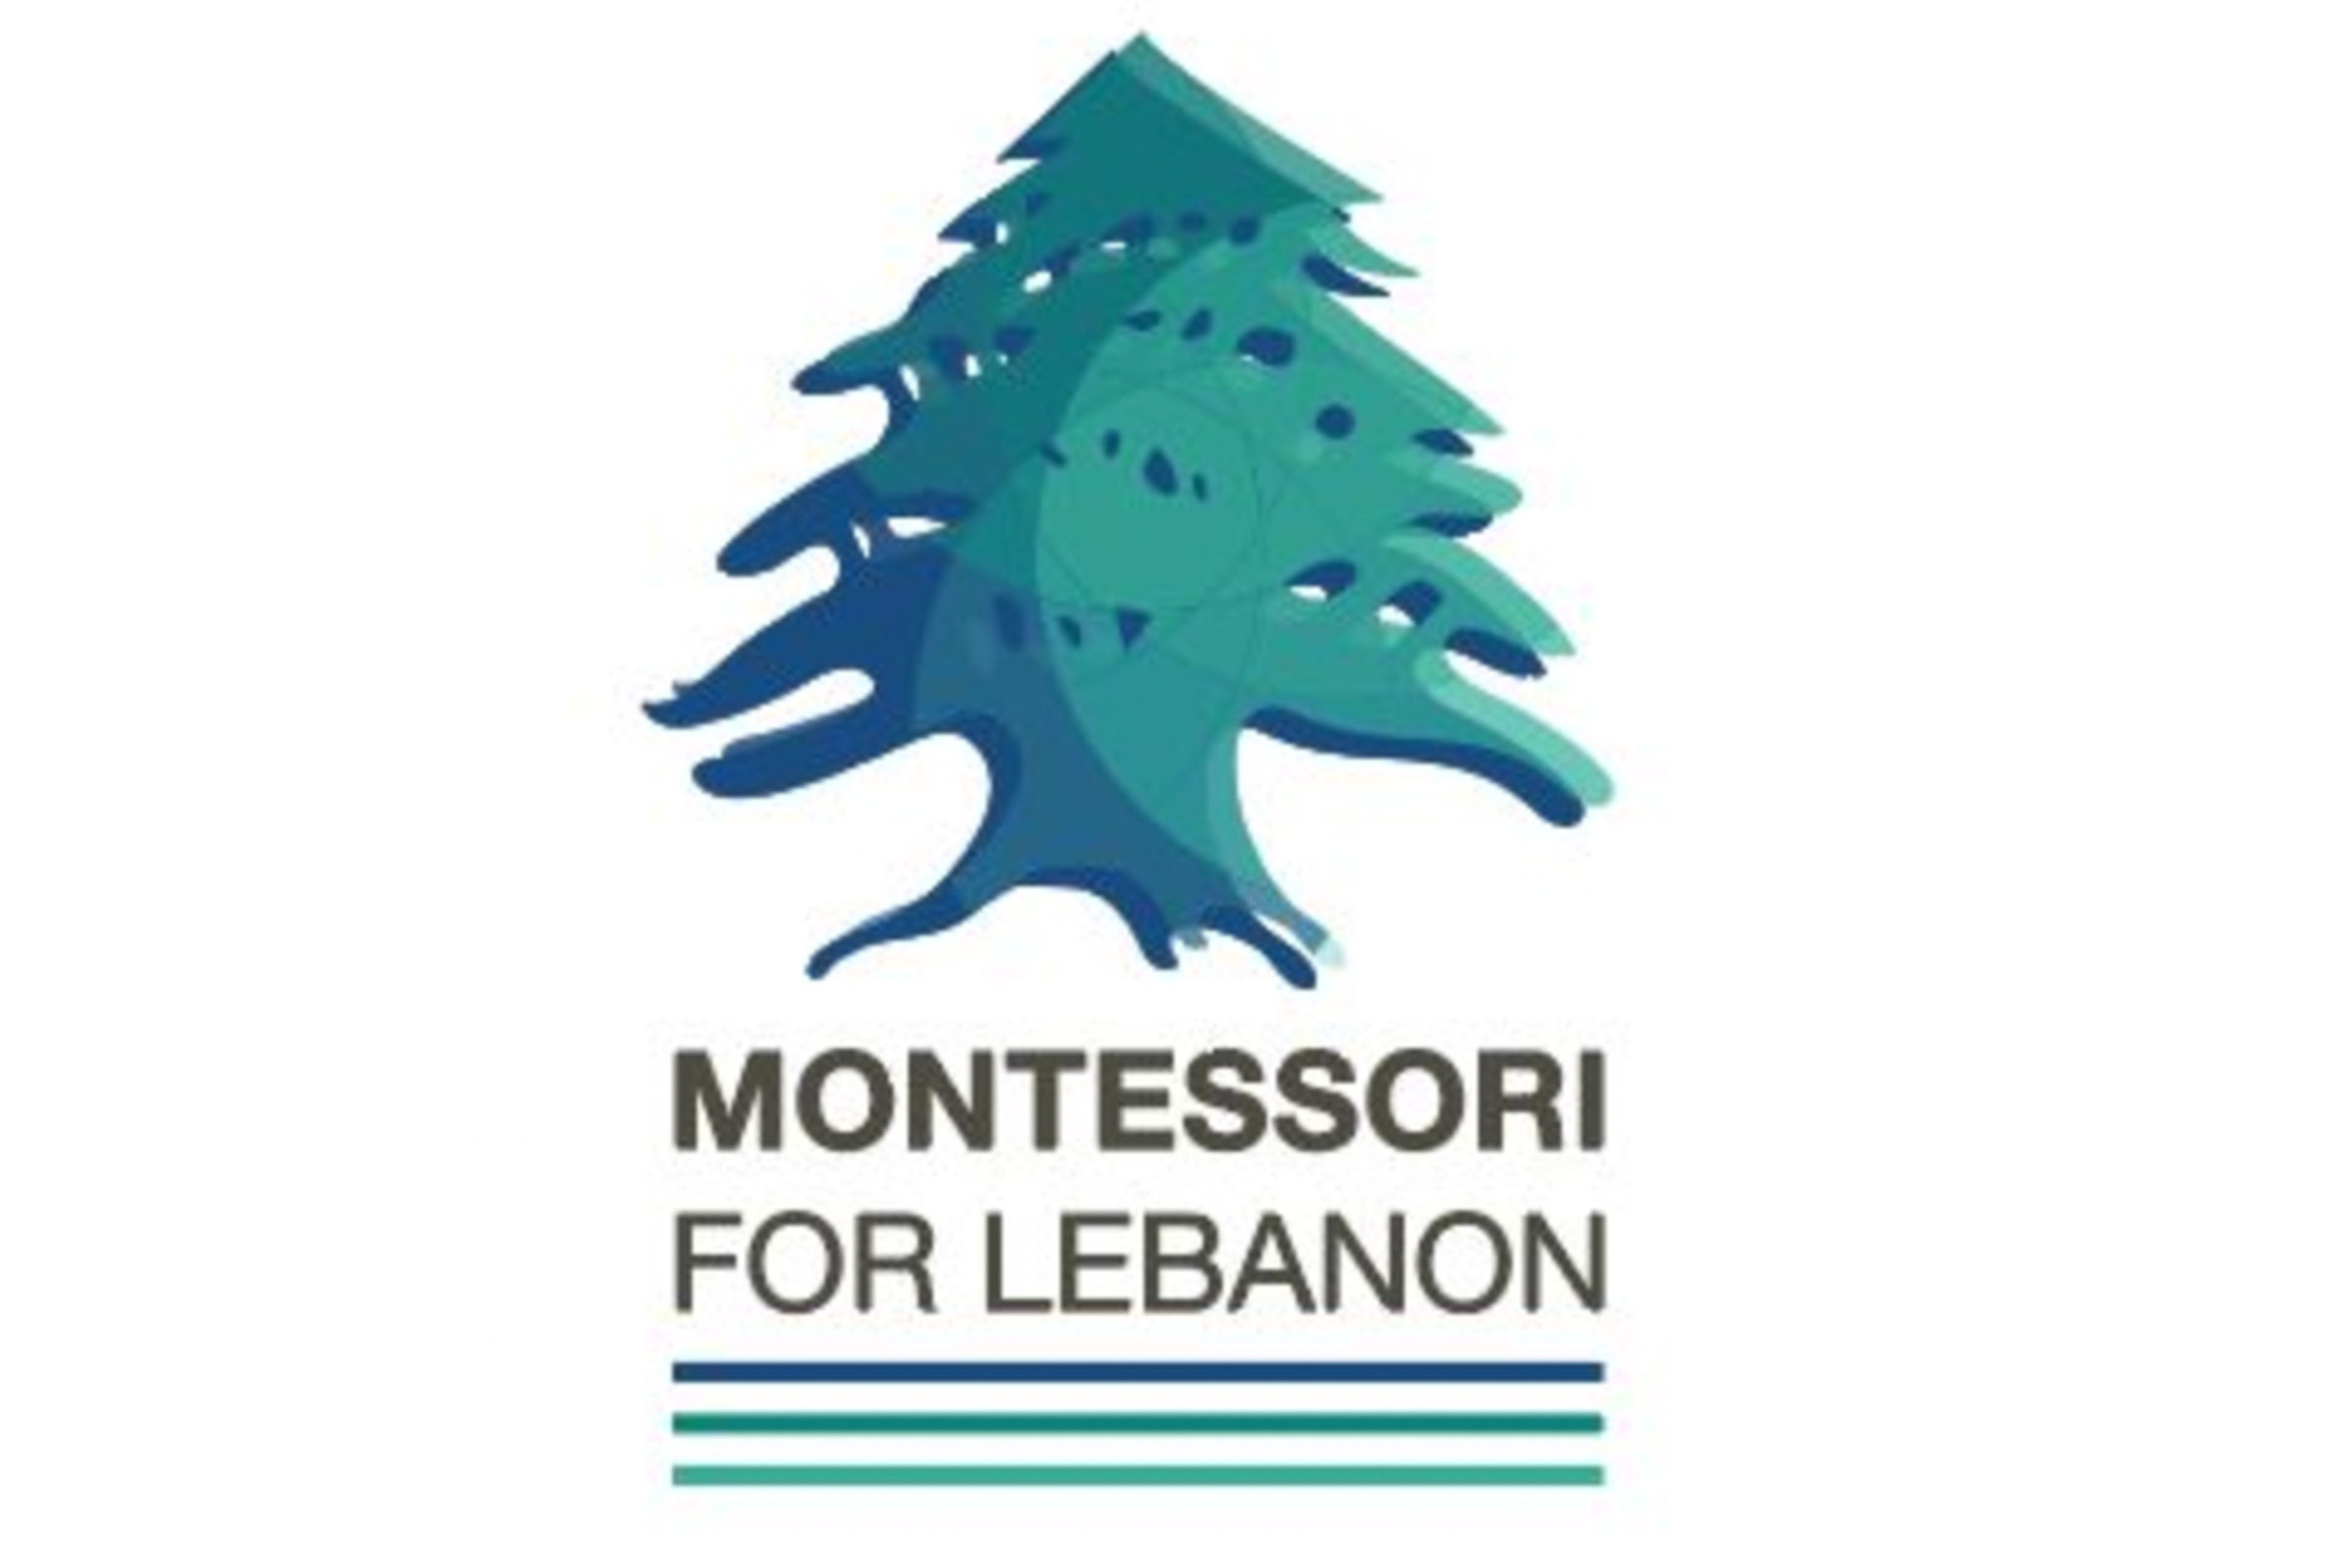 Montessori for Lebanon logo